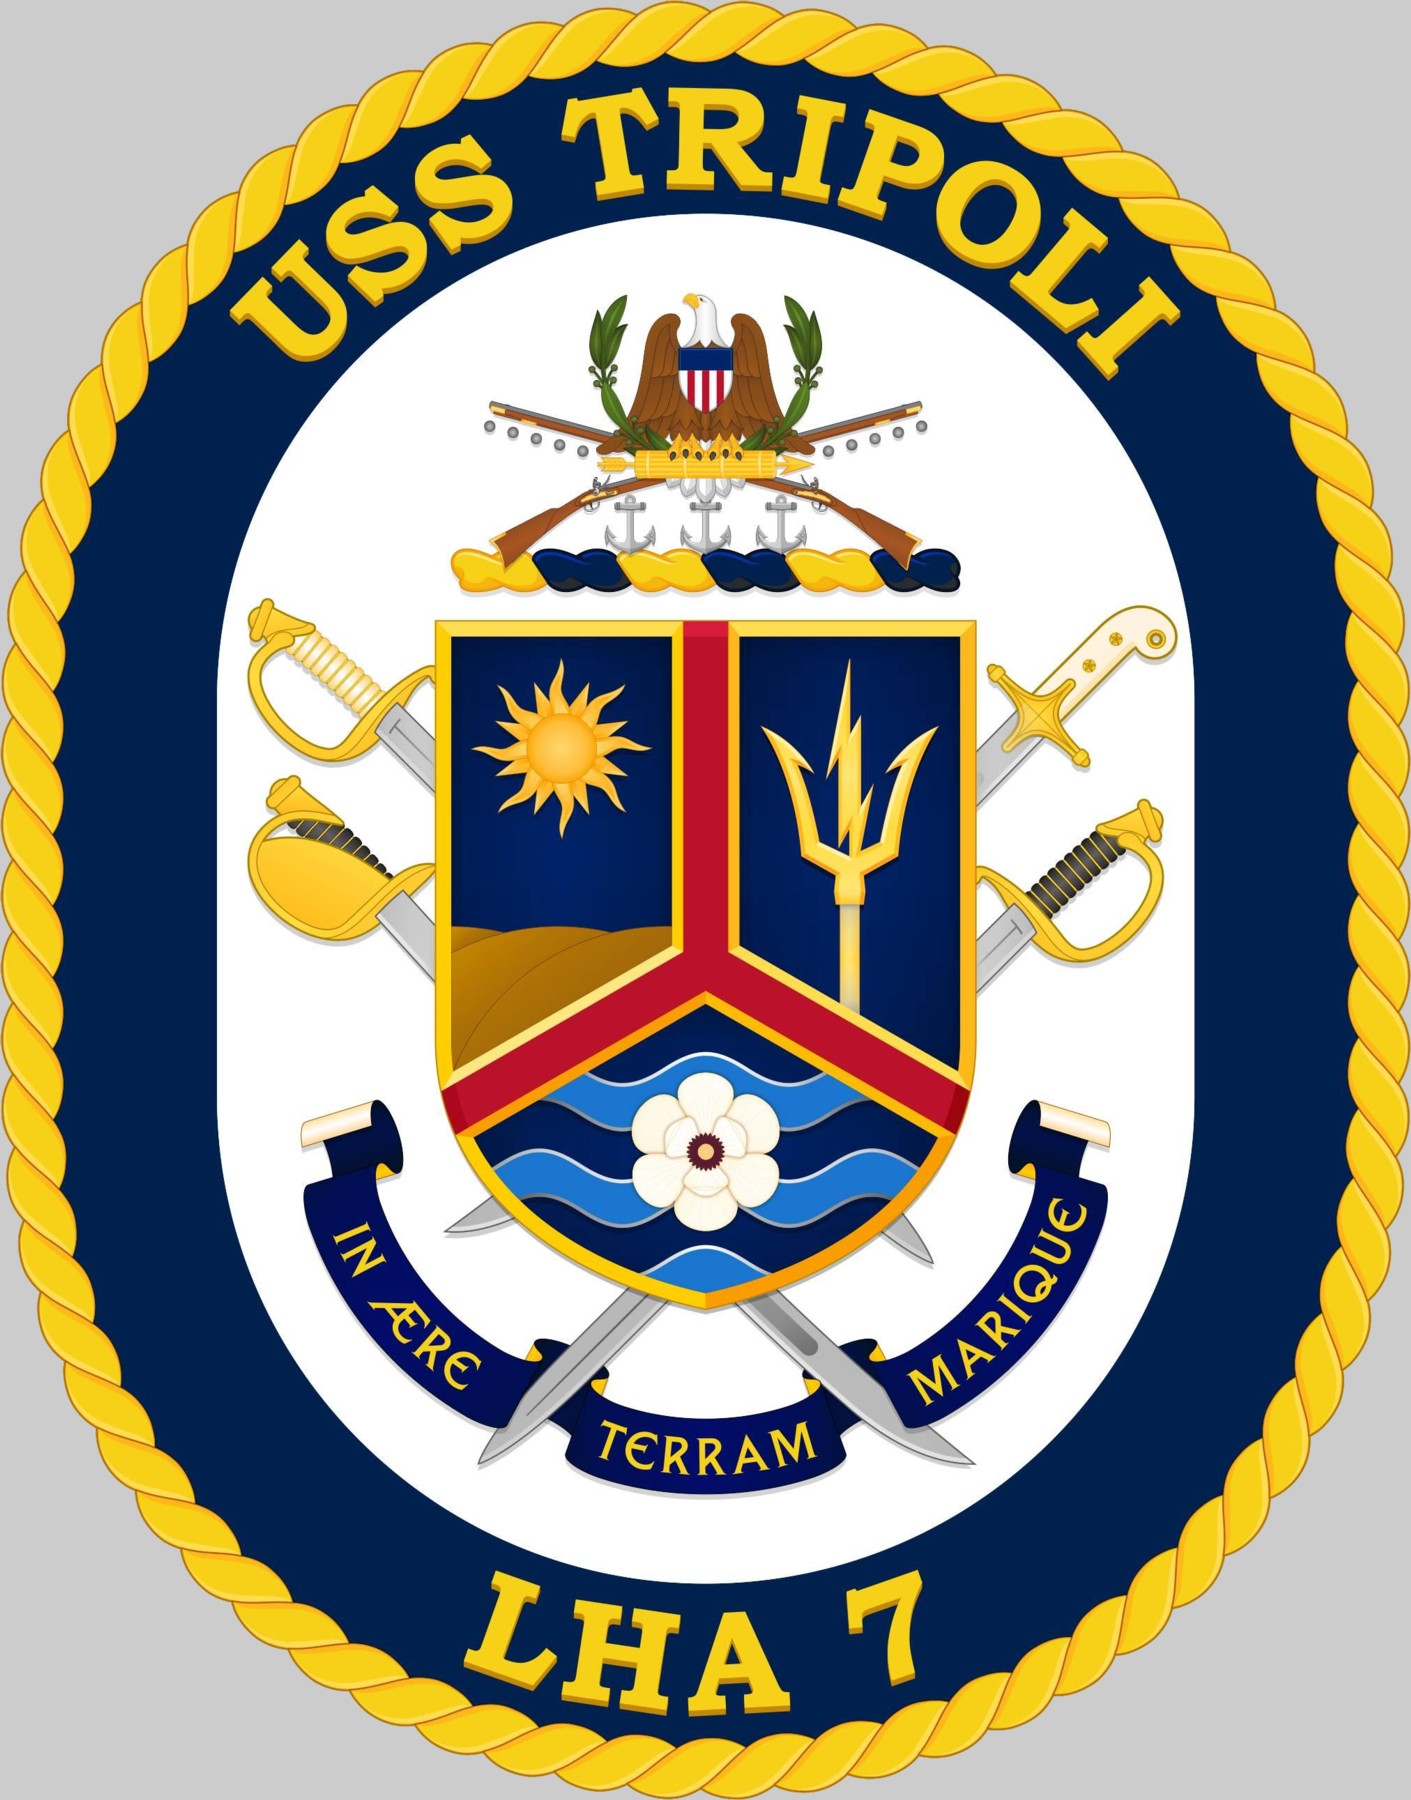 lha-7 uss tripoli insignia crest patch badge america class amphibious assault ship us navy 02x